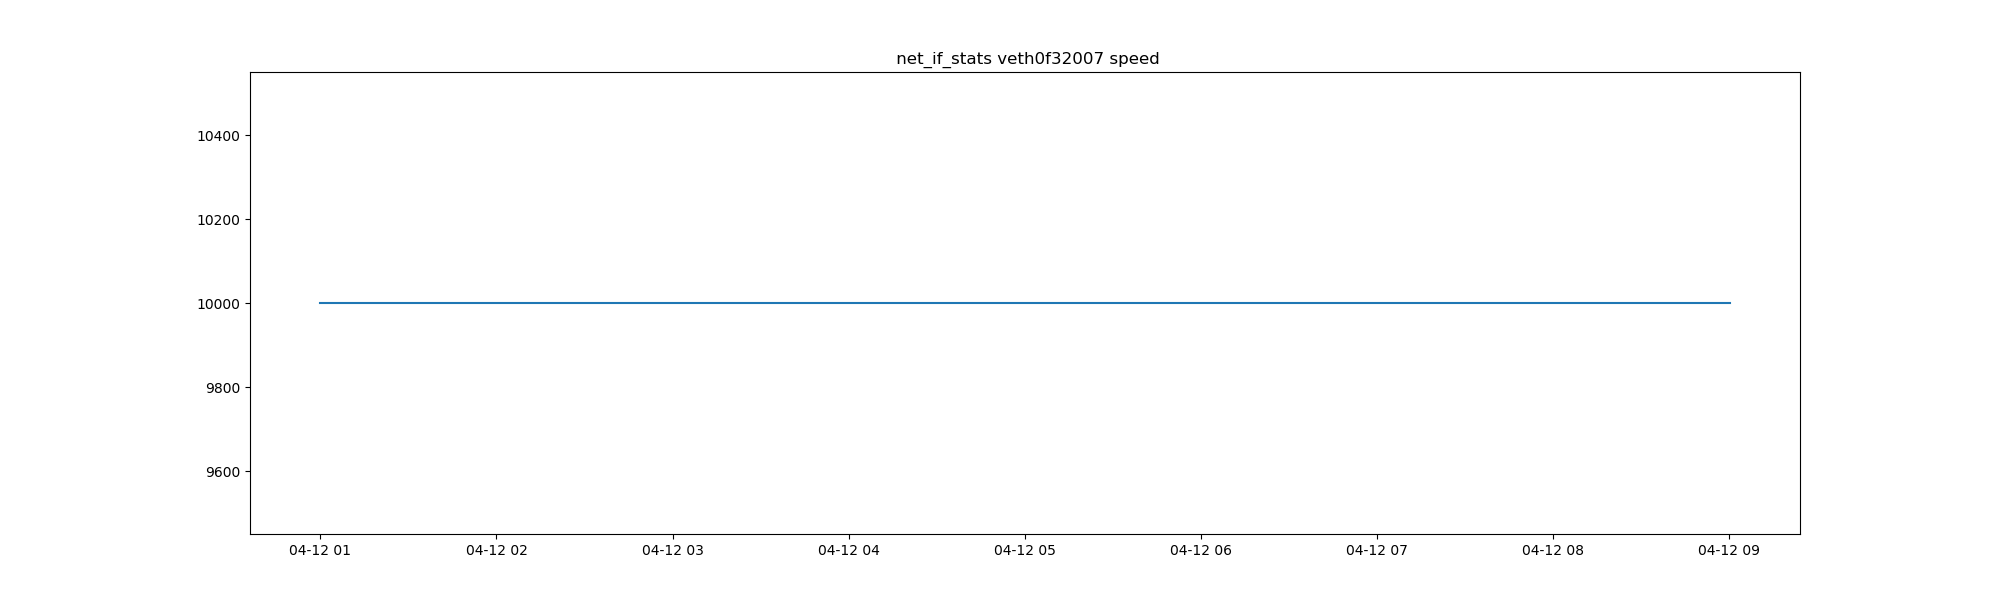 task-network-net_if_stats-tipbr0-enp0s31f6-docker0-wlp4s0-lo-tbr0-veth0f32007-isup-duplex-speed.png